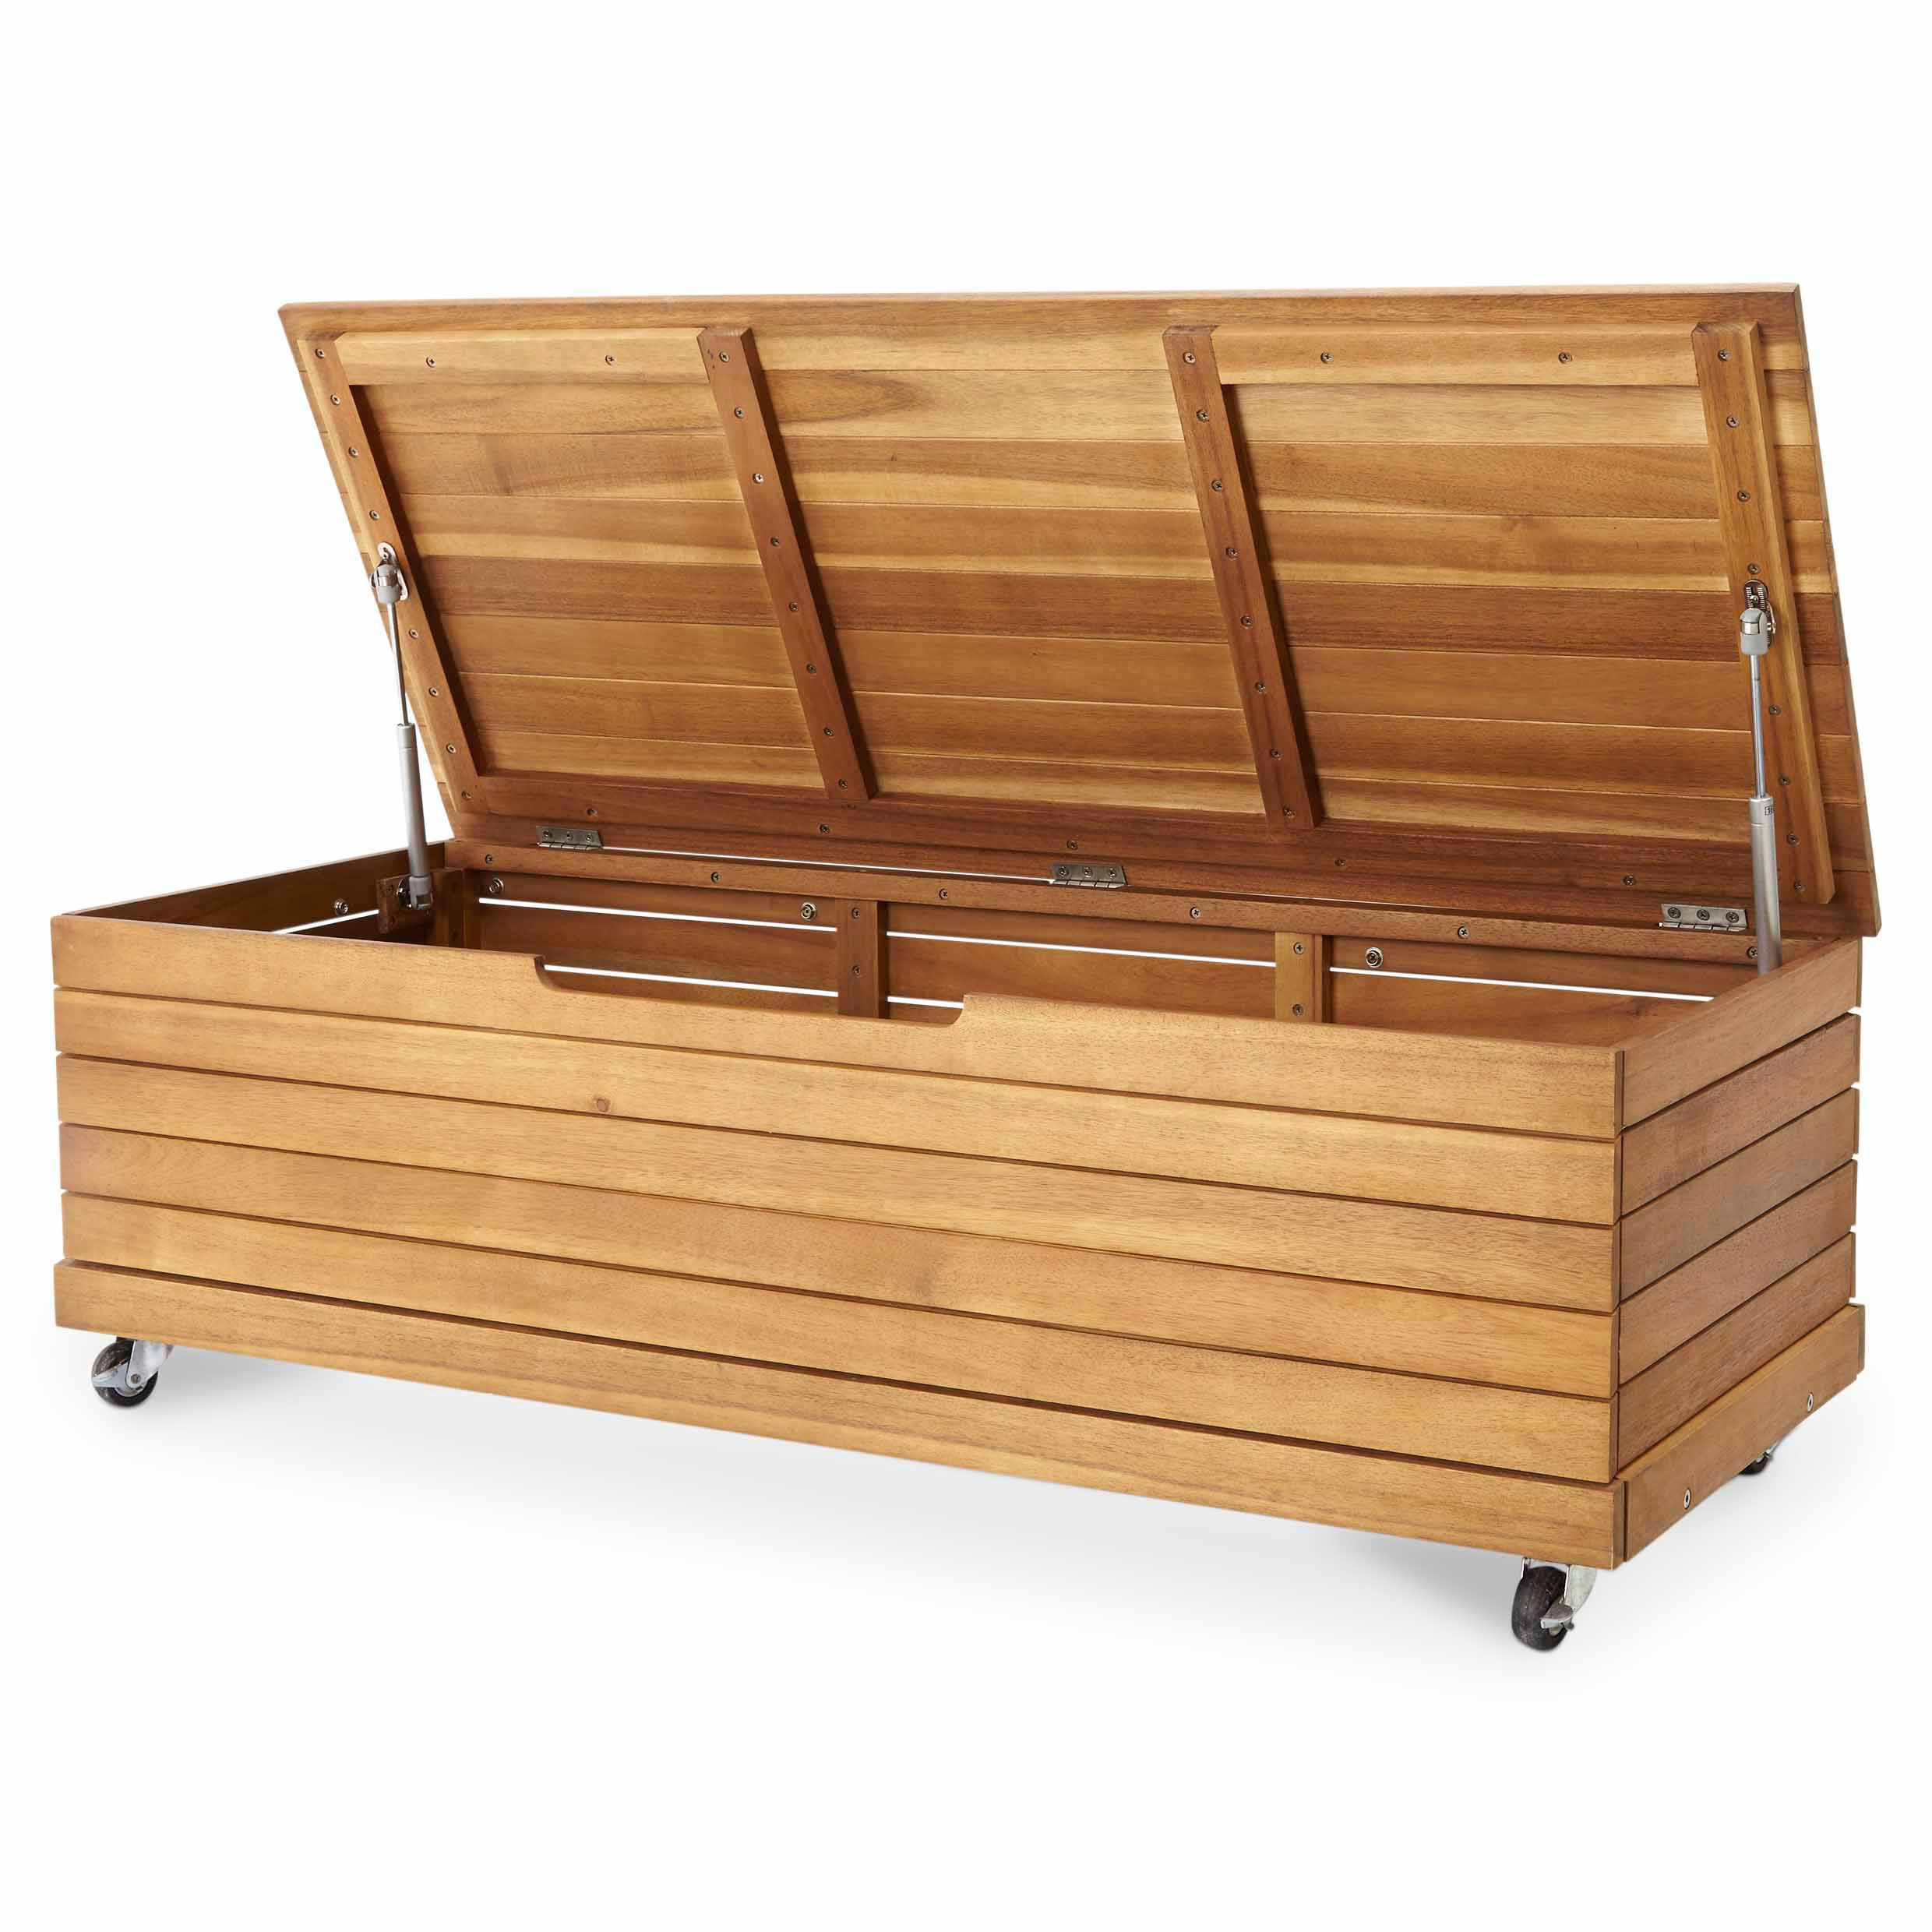 Best ideas about DIY Wooden Storage Box
. Save or Pin Denia Wooden Garden storage box Departments Now.